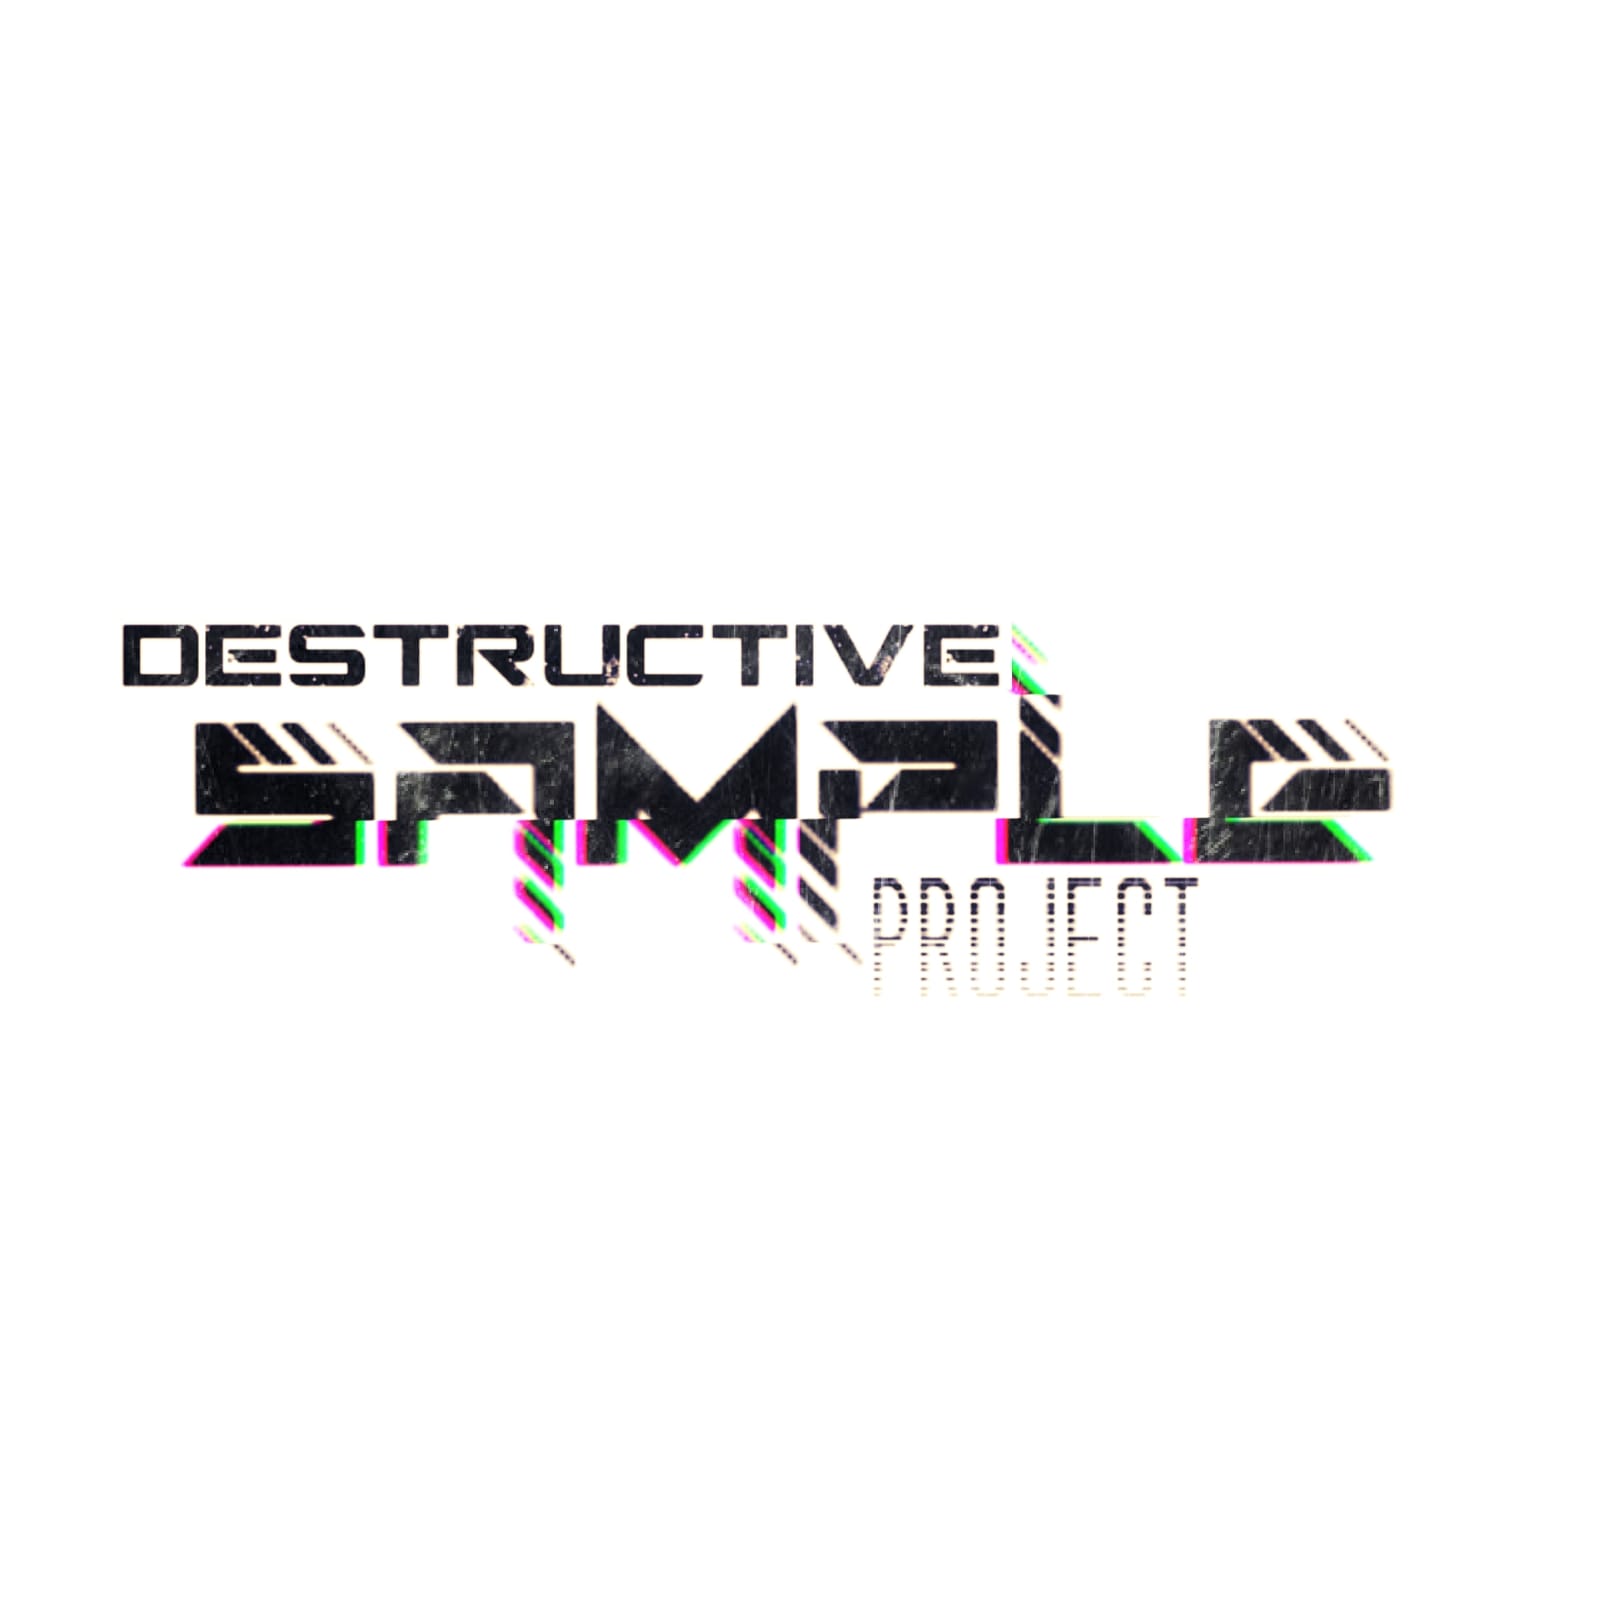 Destructive Sample Project